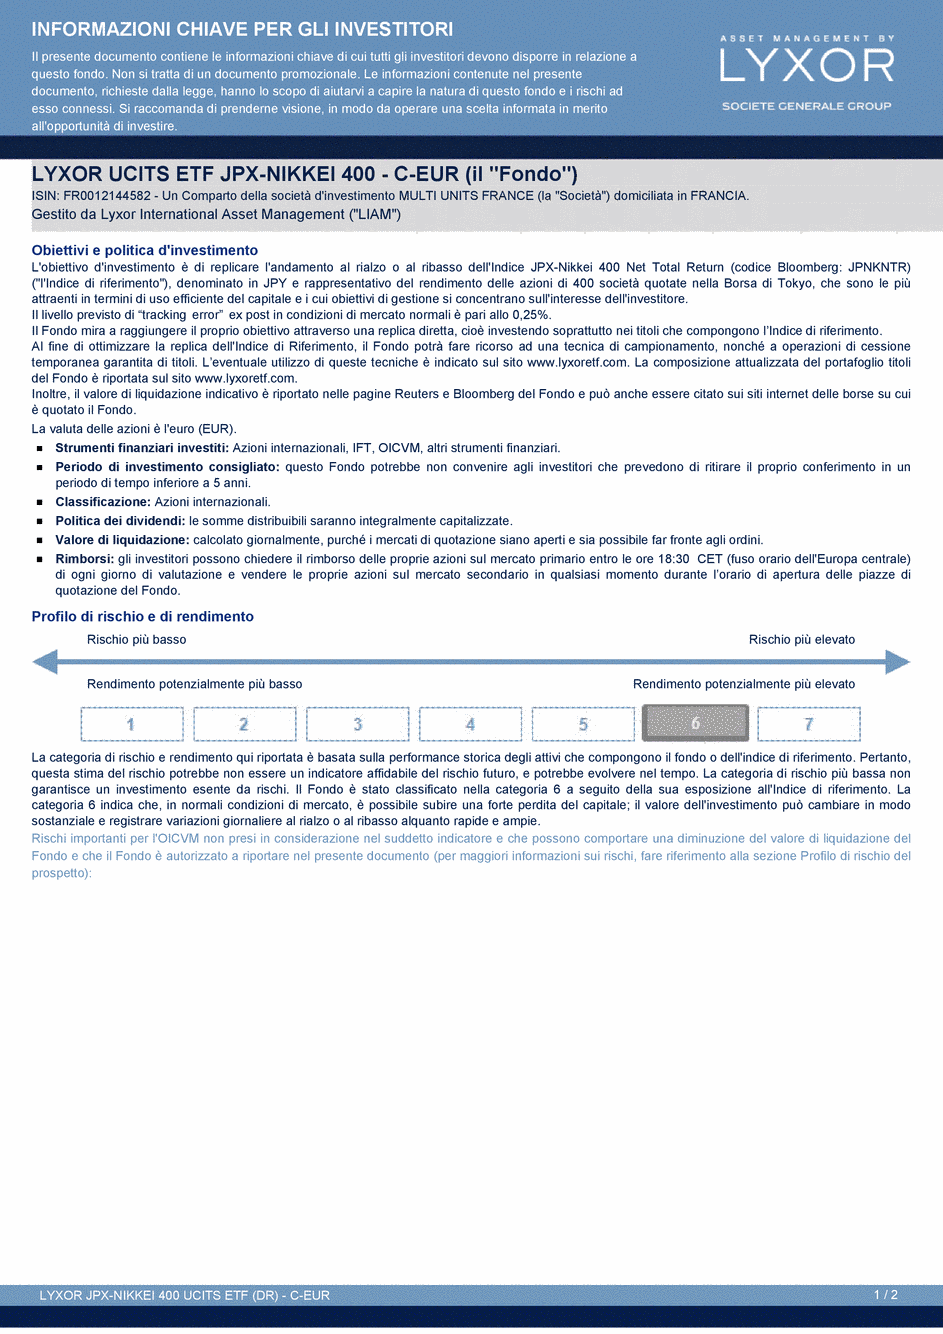 DICI LYXOR JPX-NIKKEI 400 UCITS ETF (DR) C-EUR - 20/08/2015 - Italien